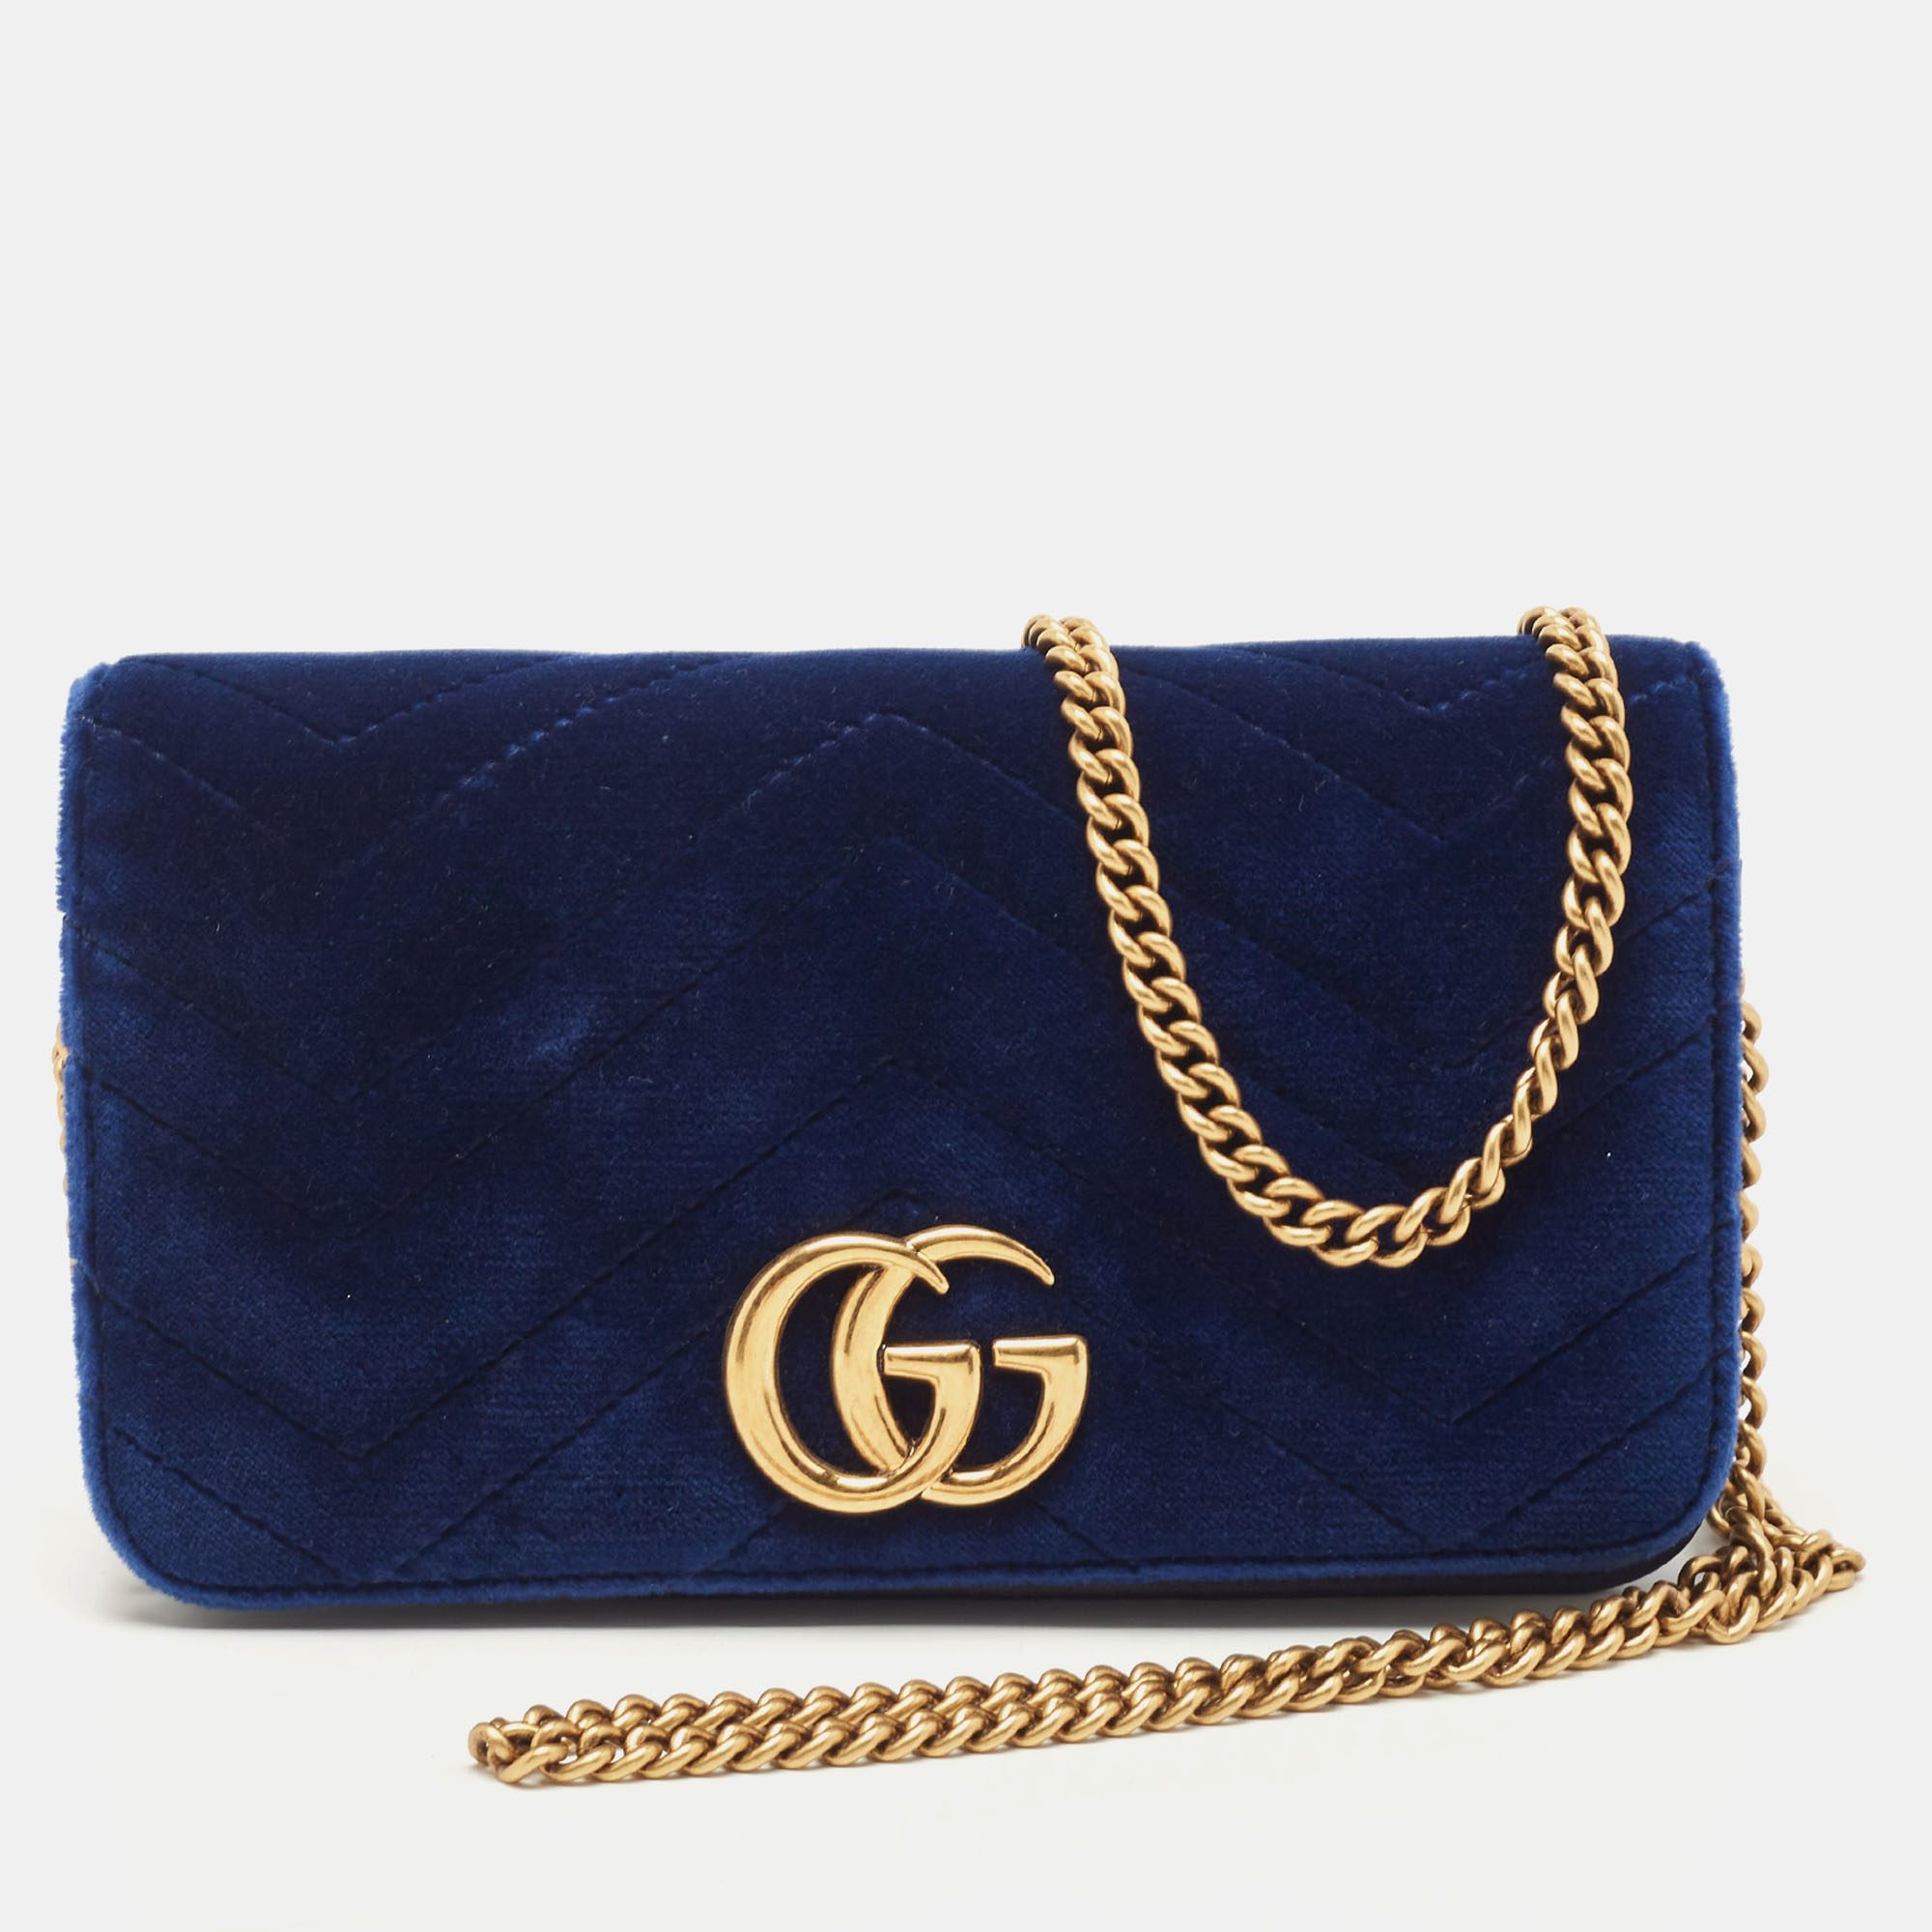 Gucci GG Marmont Super Mini Shoulder Bag in Blue